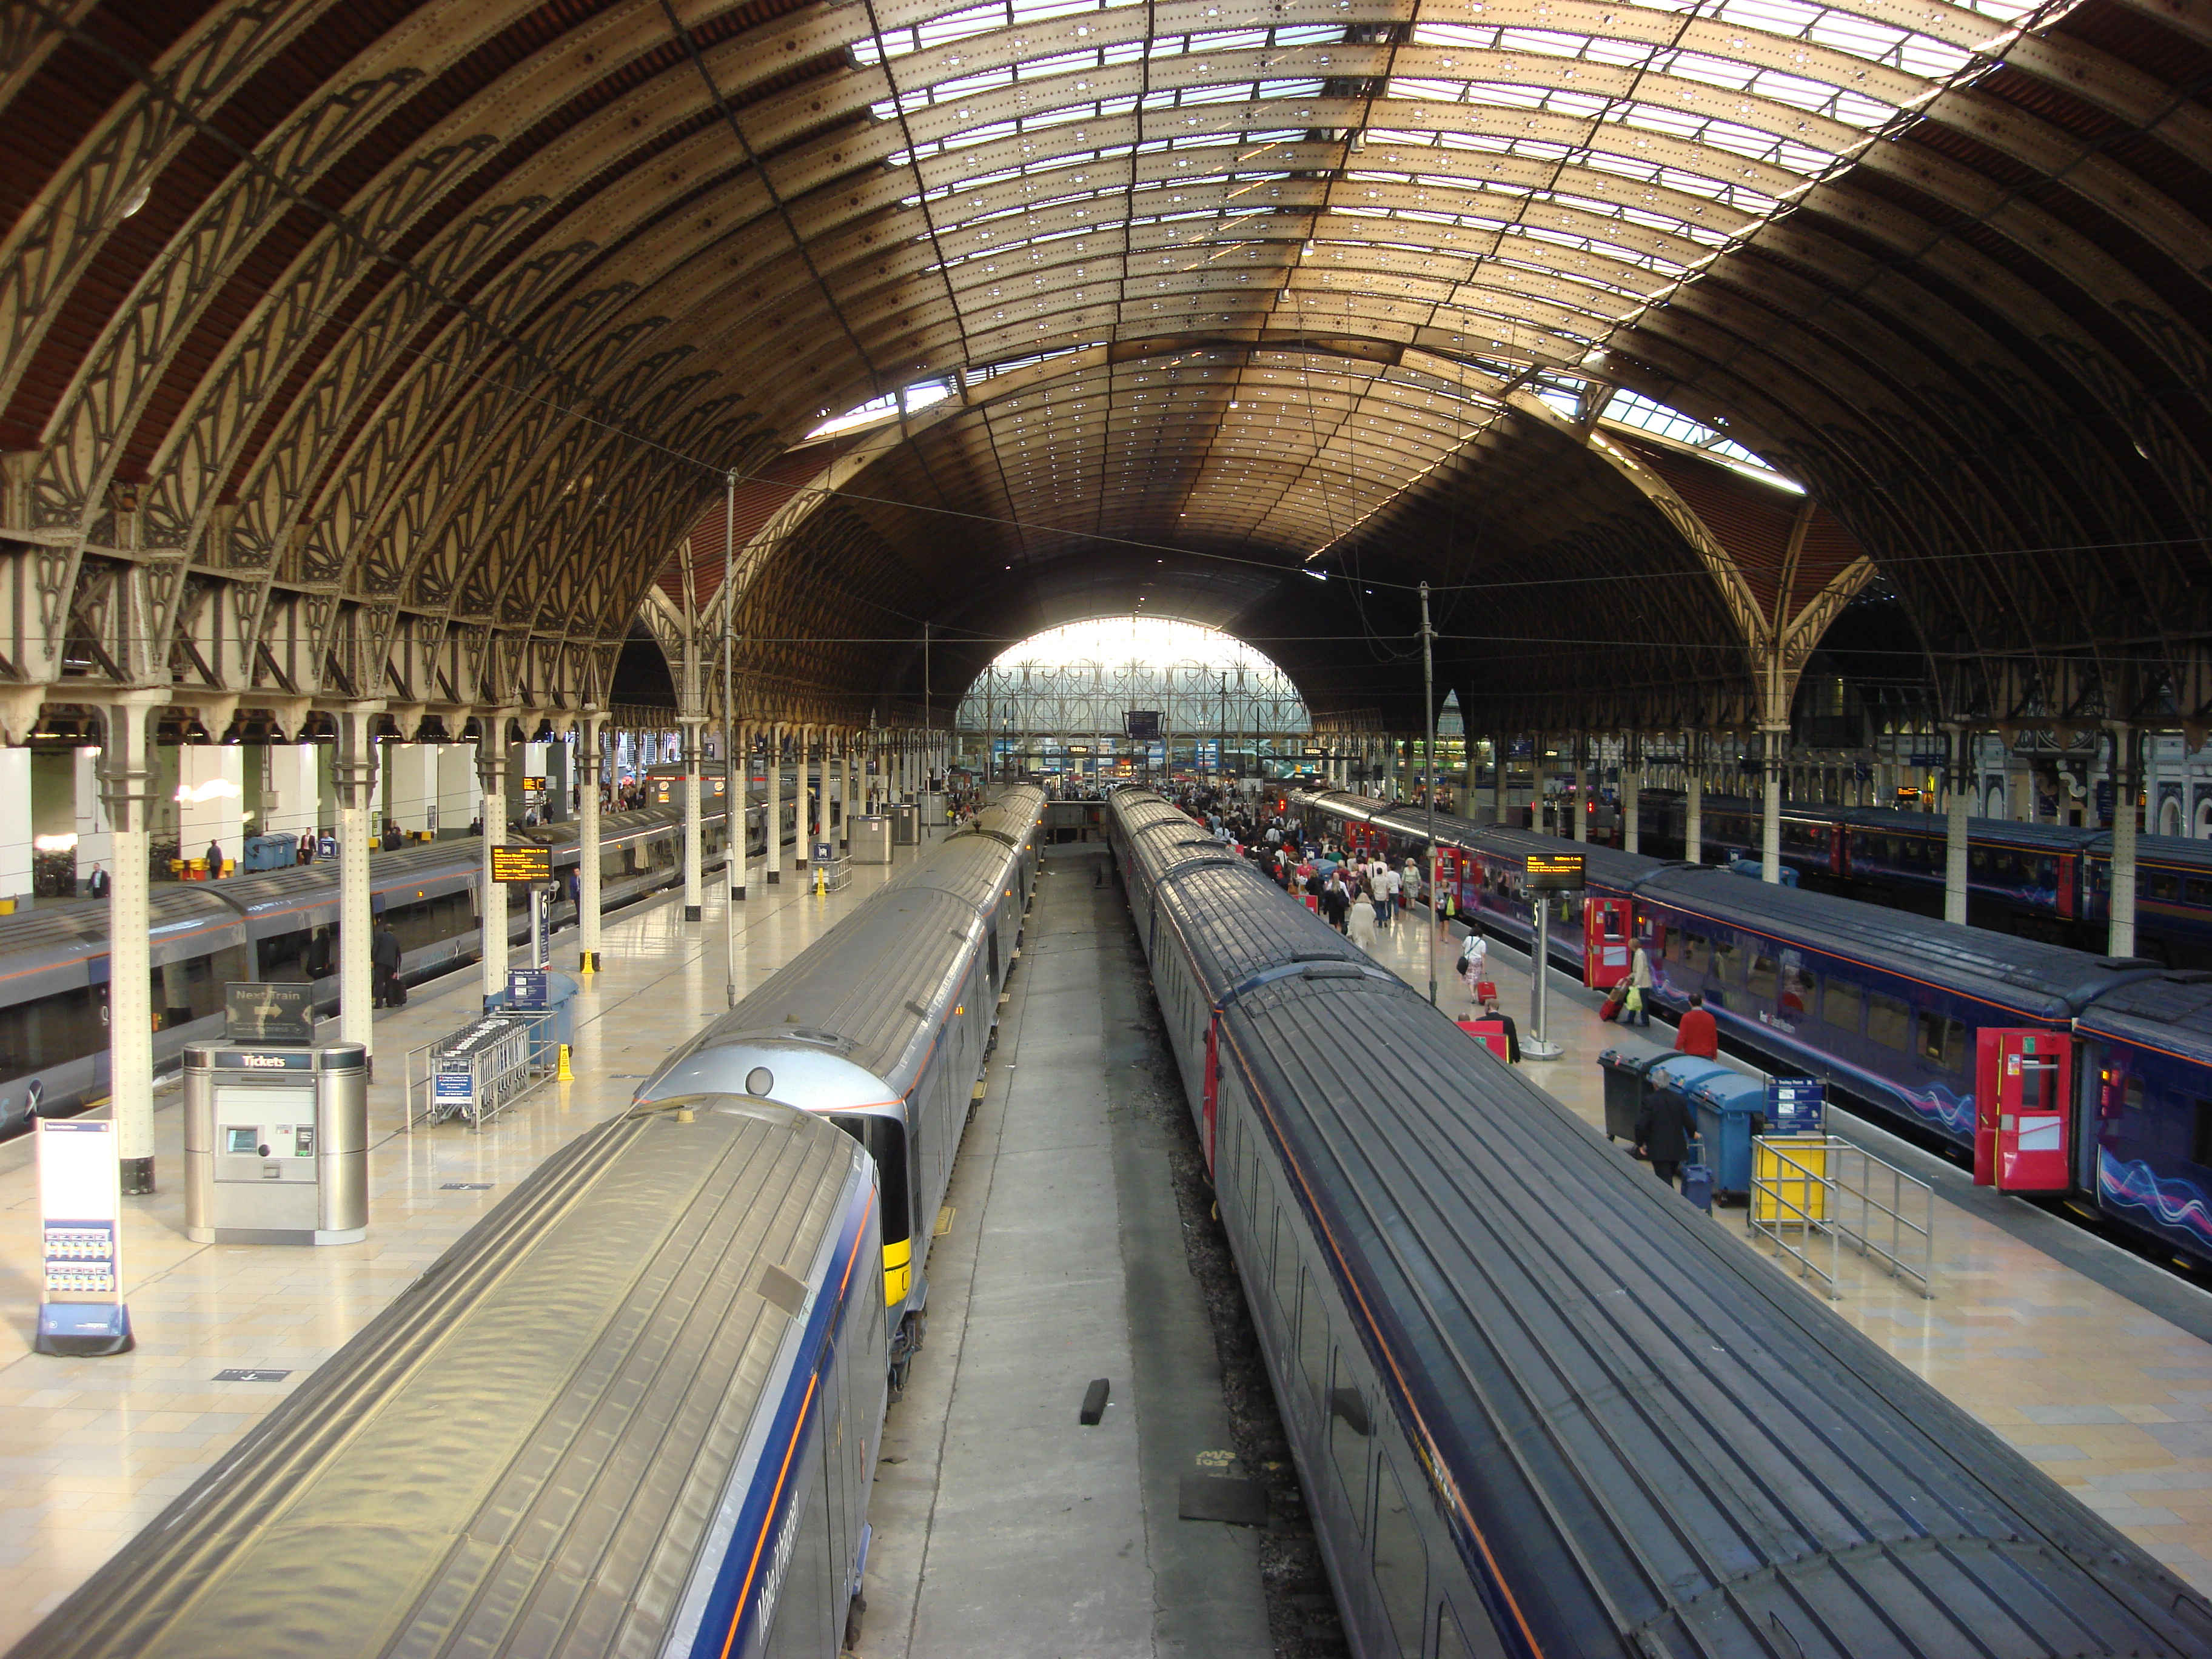 Railways london. Вокзал Кингс кросс. Станция метро Кингс кросс. Станция Паддингтон в Лондоне. ЖД вокзал Лондон.